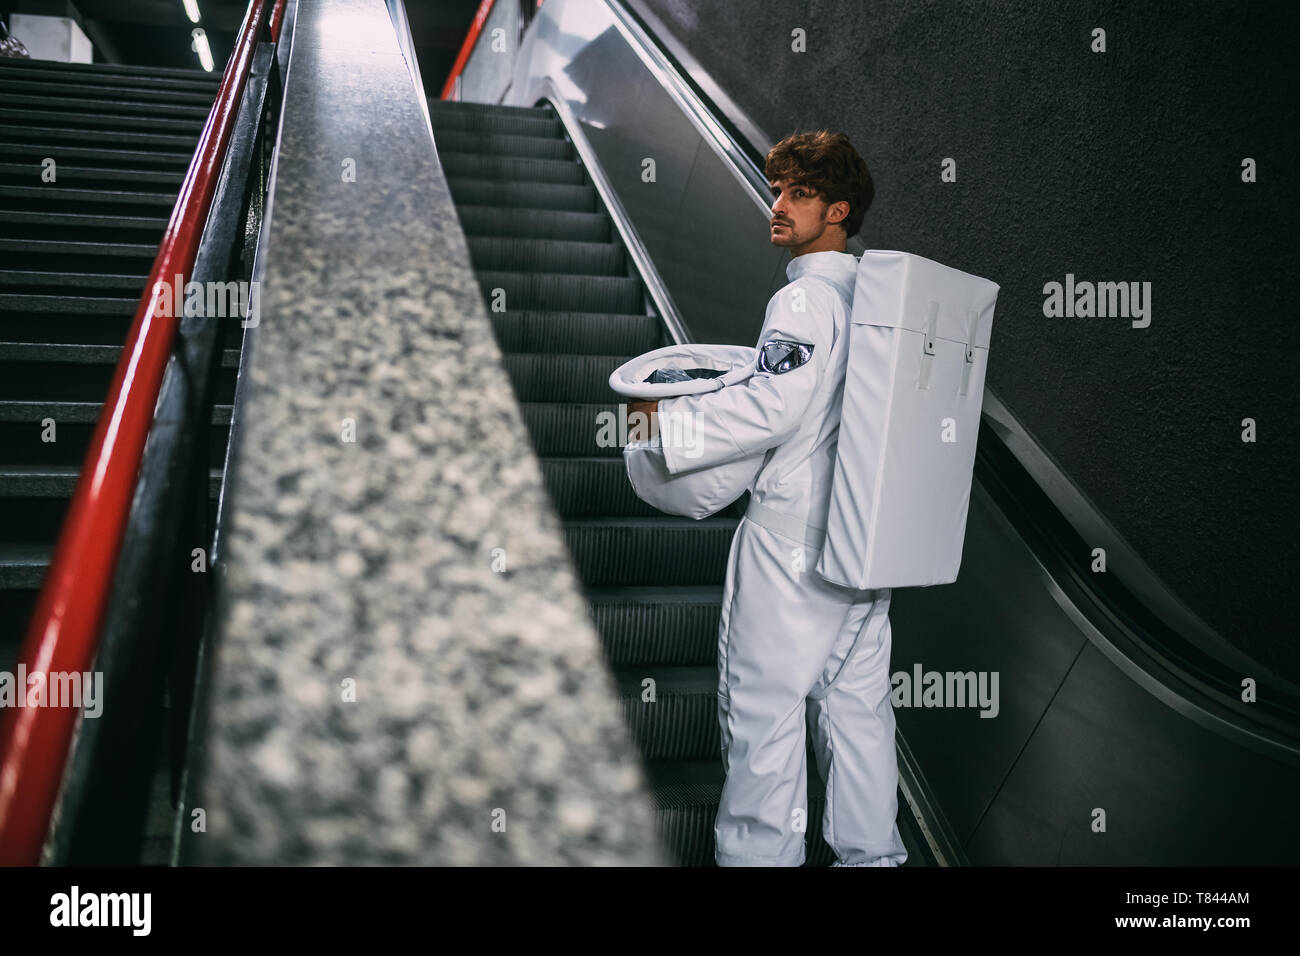 Astronaut going up escalator Stock Photo